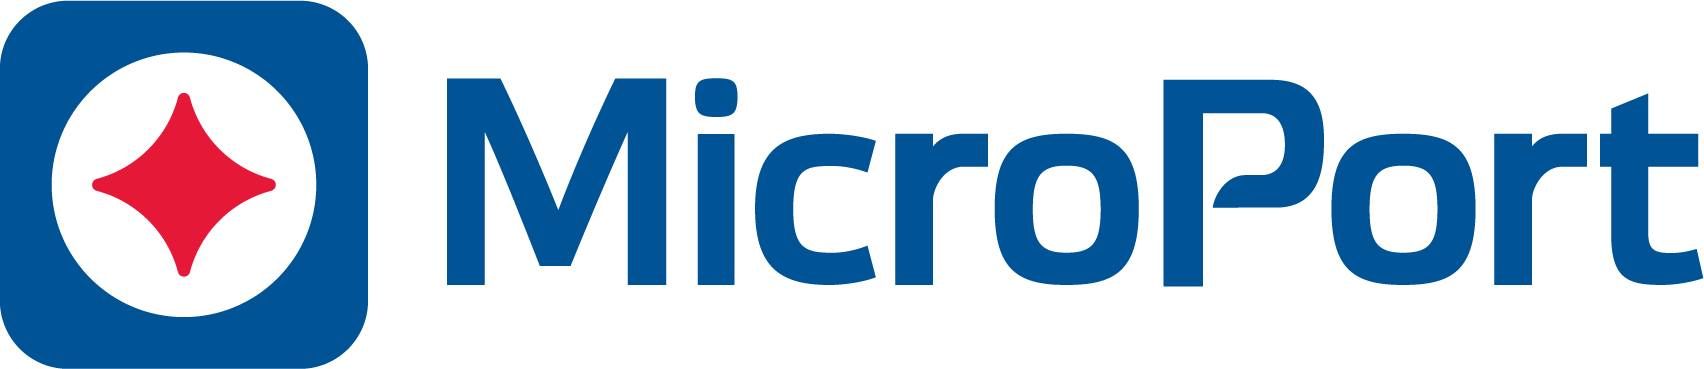 Microport CRM UK Ltd logo